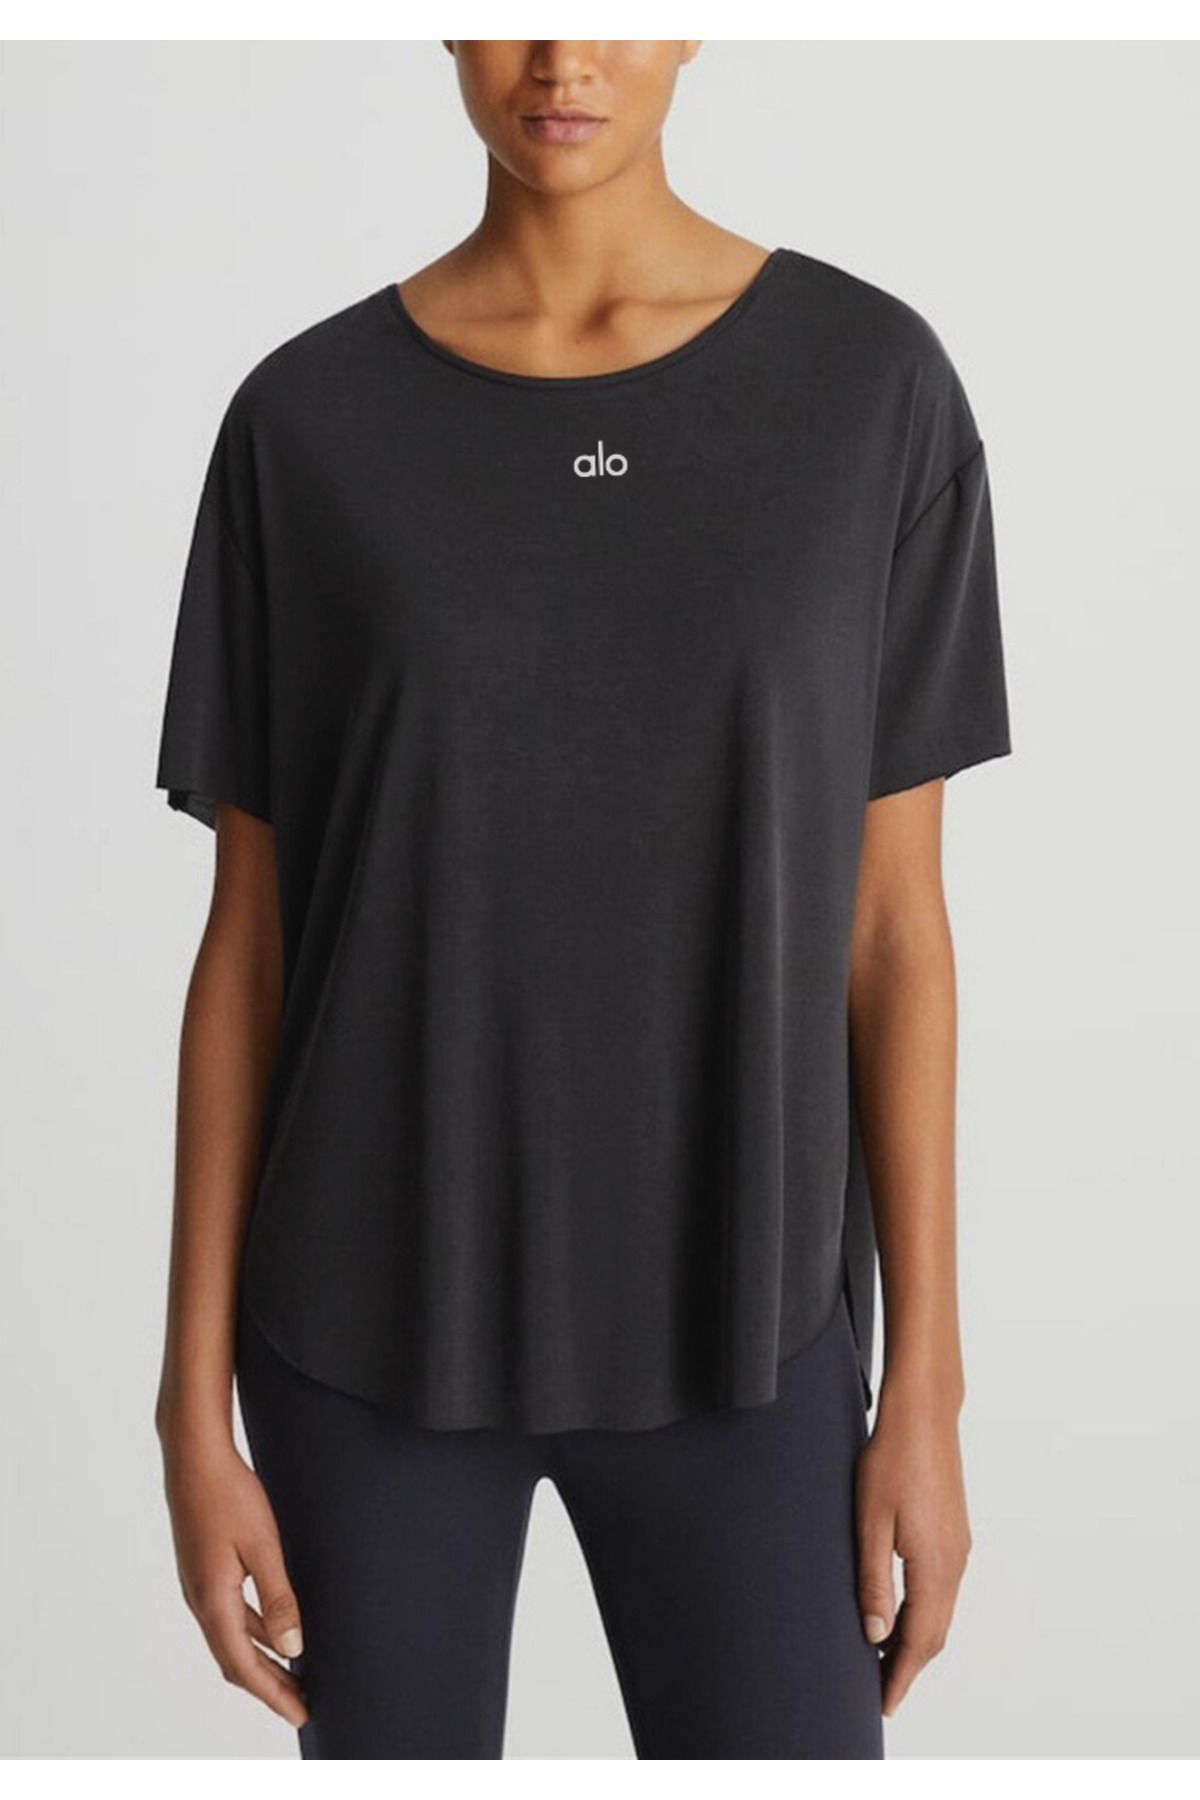 inu yoga Alo Modal Lyocell İçerikli Supersoft Yoga T-shirt Antrasit